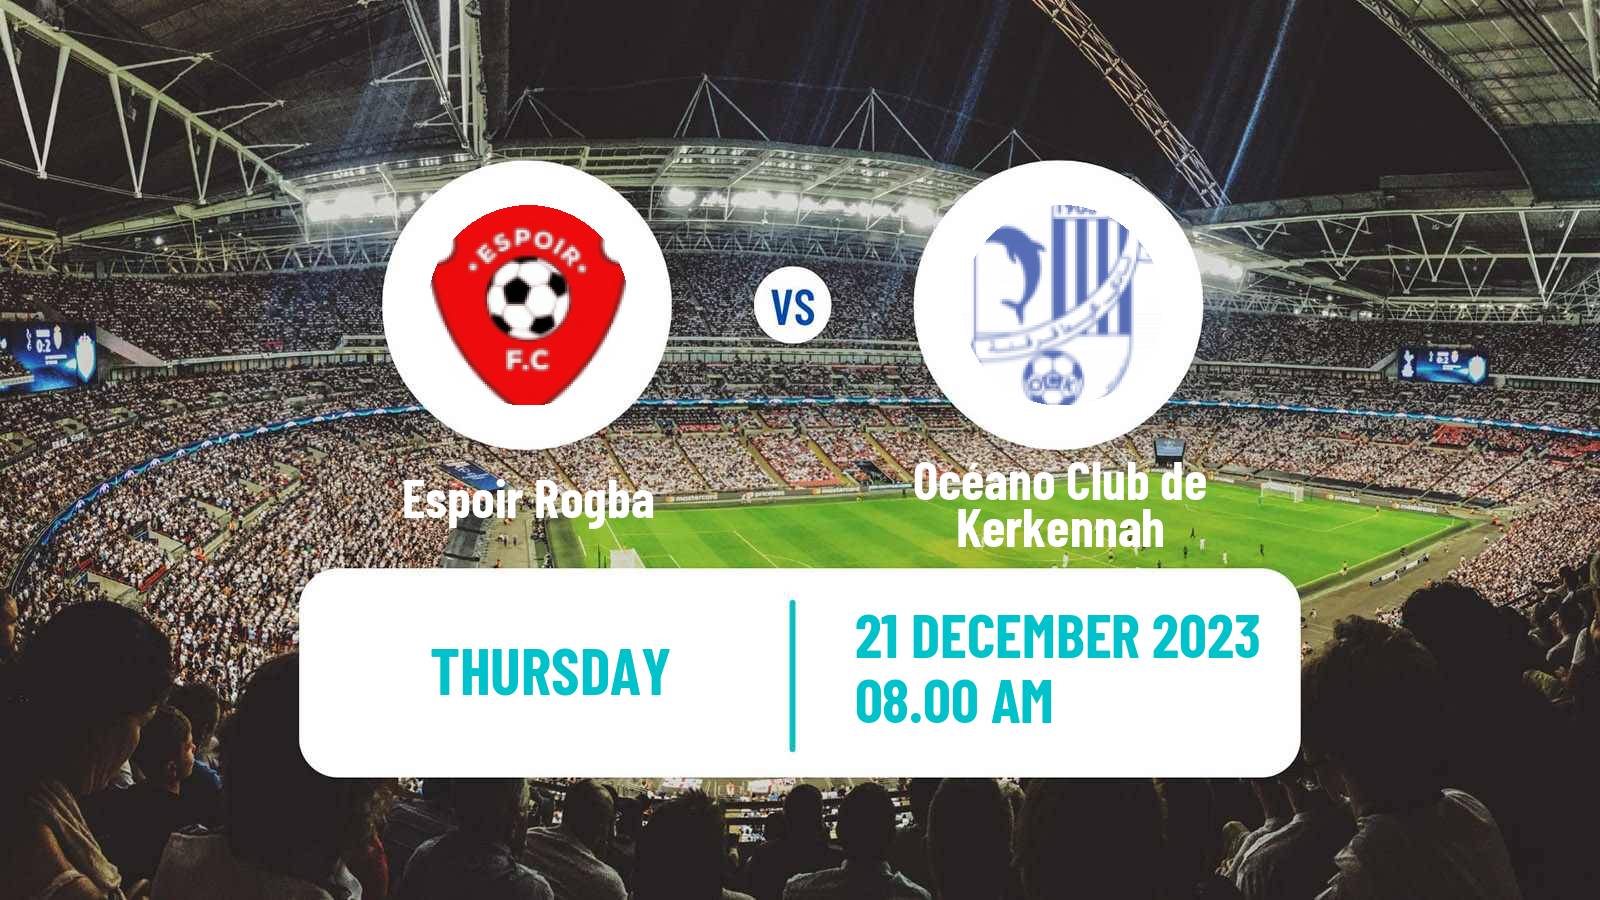 Soccer Tunisian Ligue 2 Espoir Rogba - Océano Club de Kerkennah